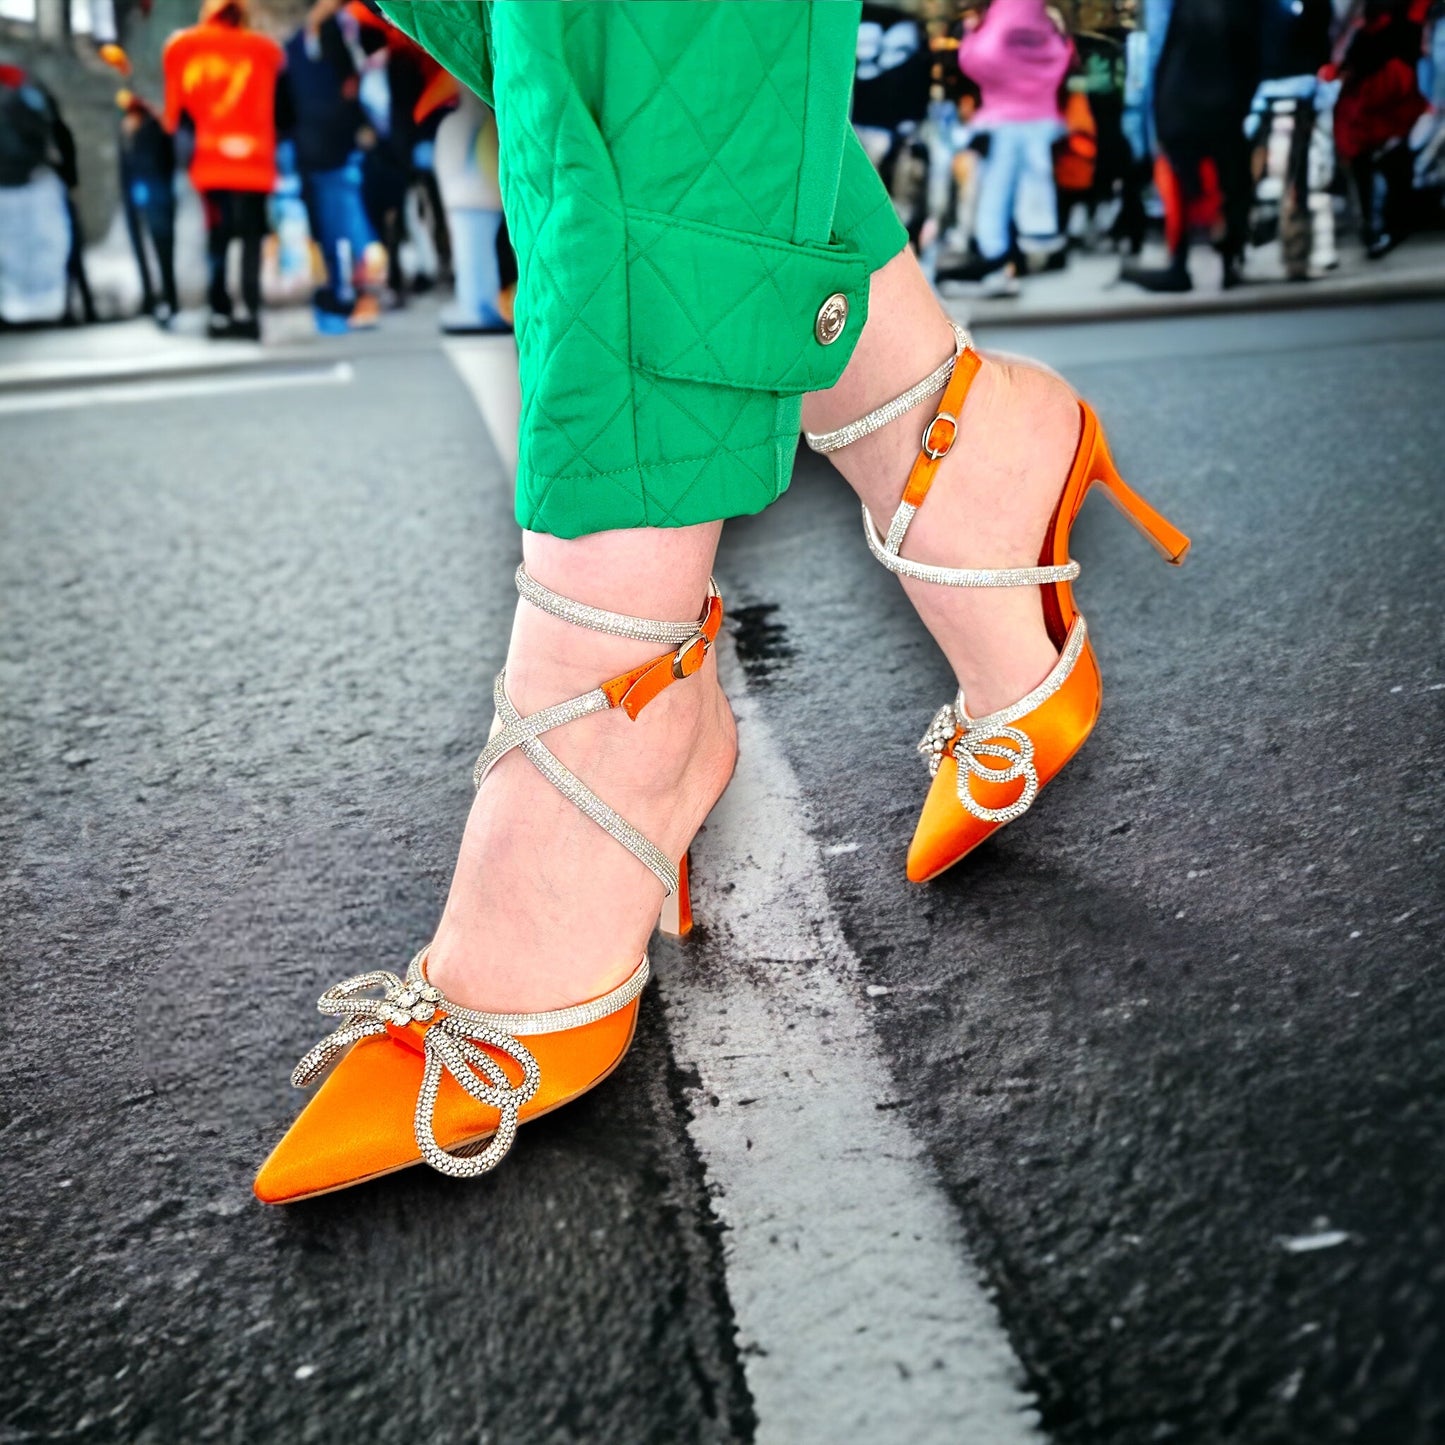 The Floransa Orange Leather Pointy Toe Ankle Strap Women Sandal